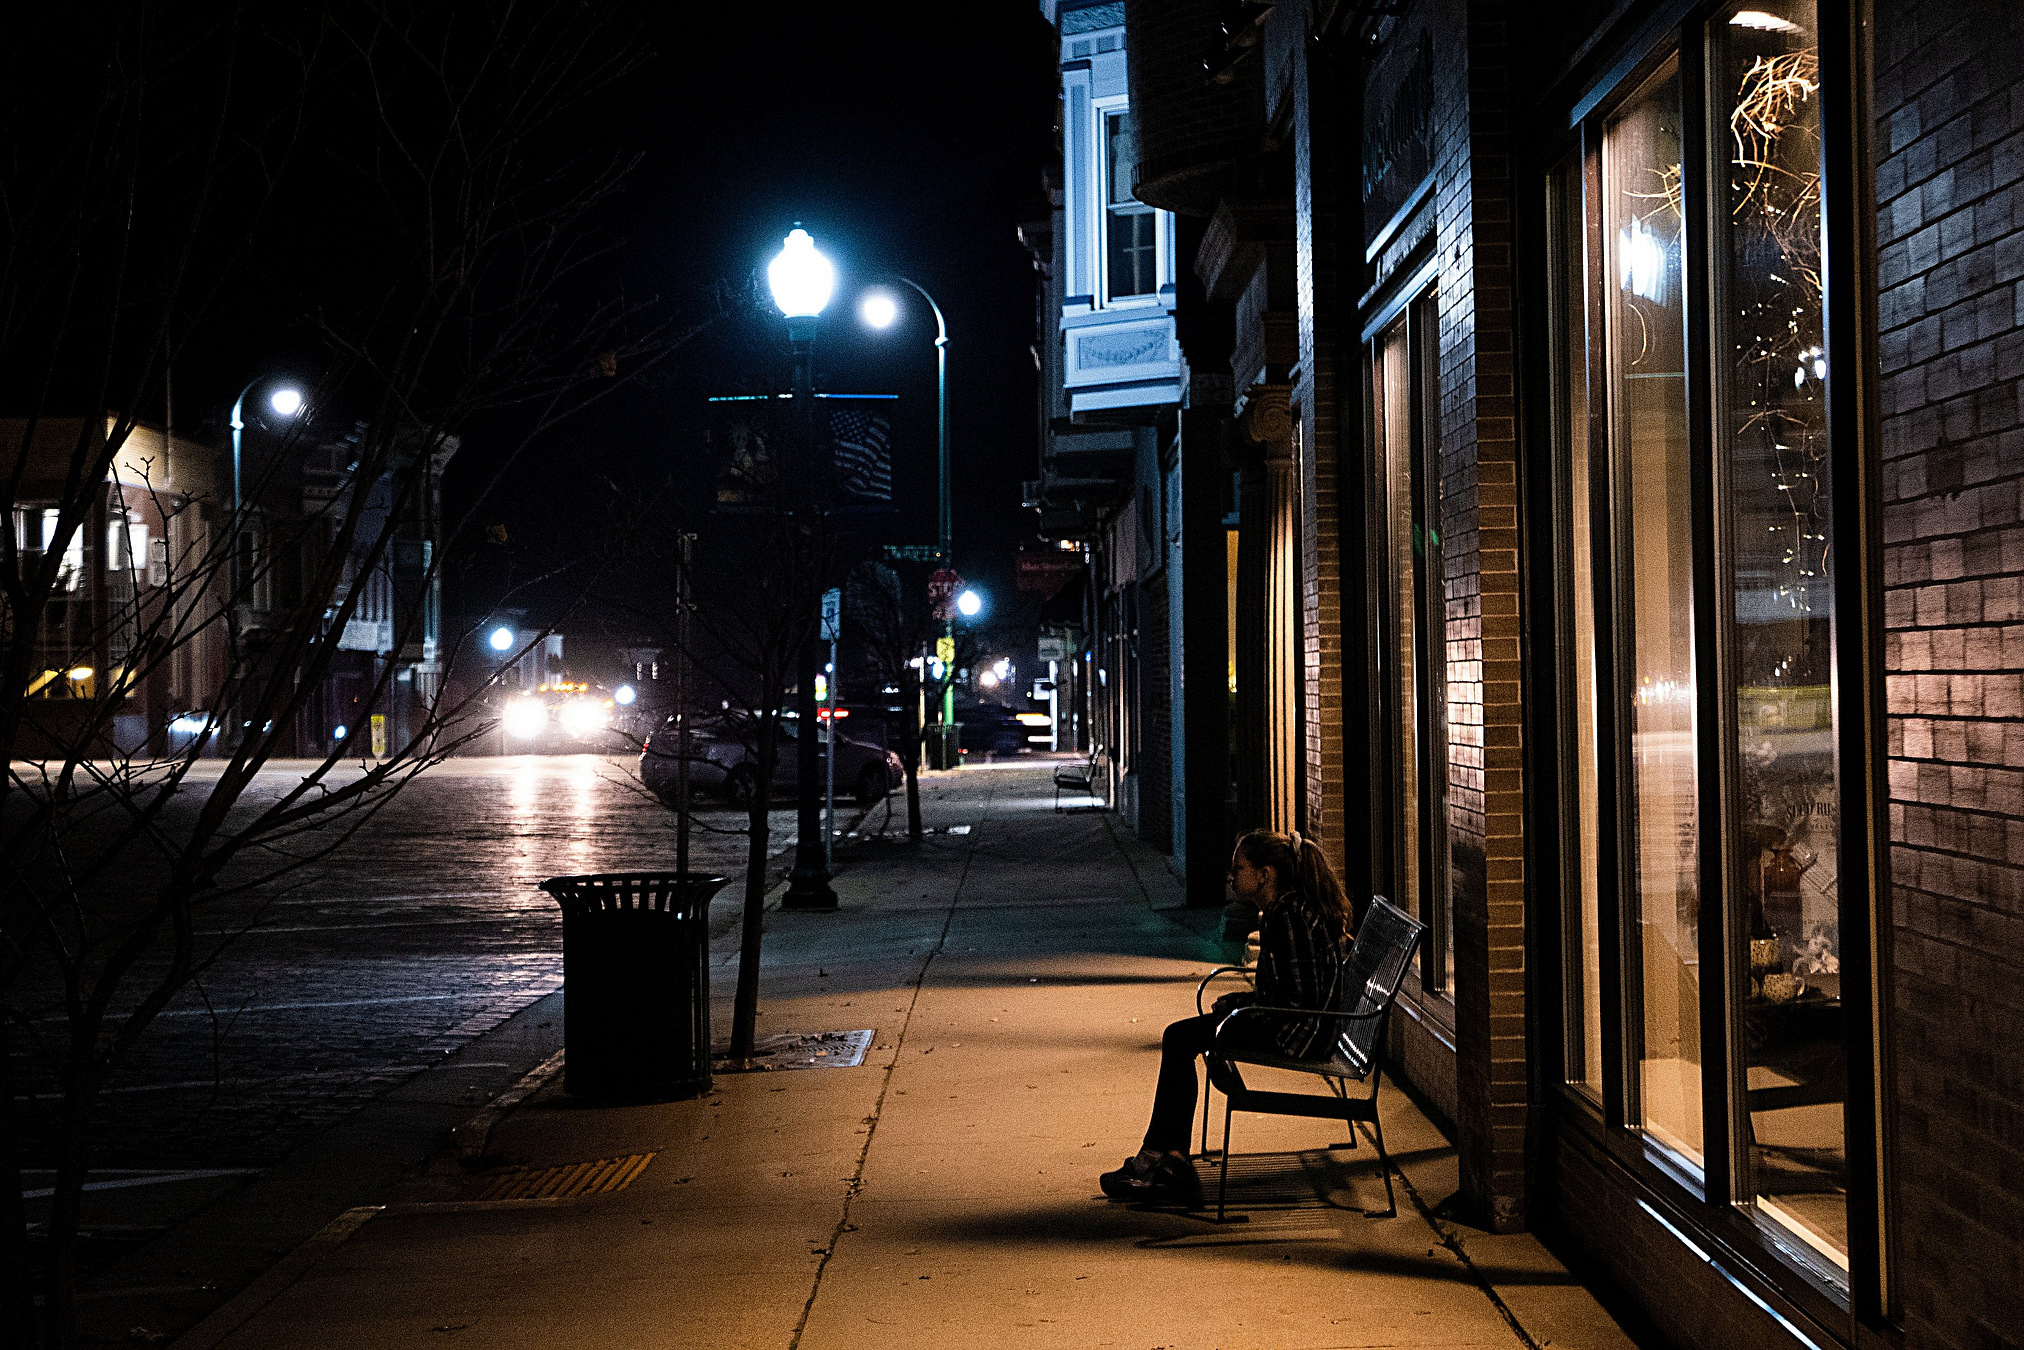 Street Photography at Night